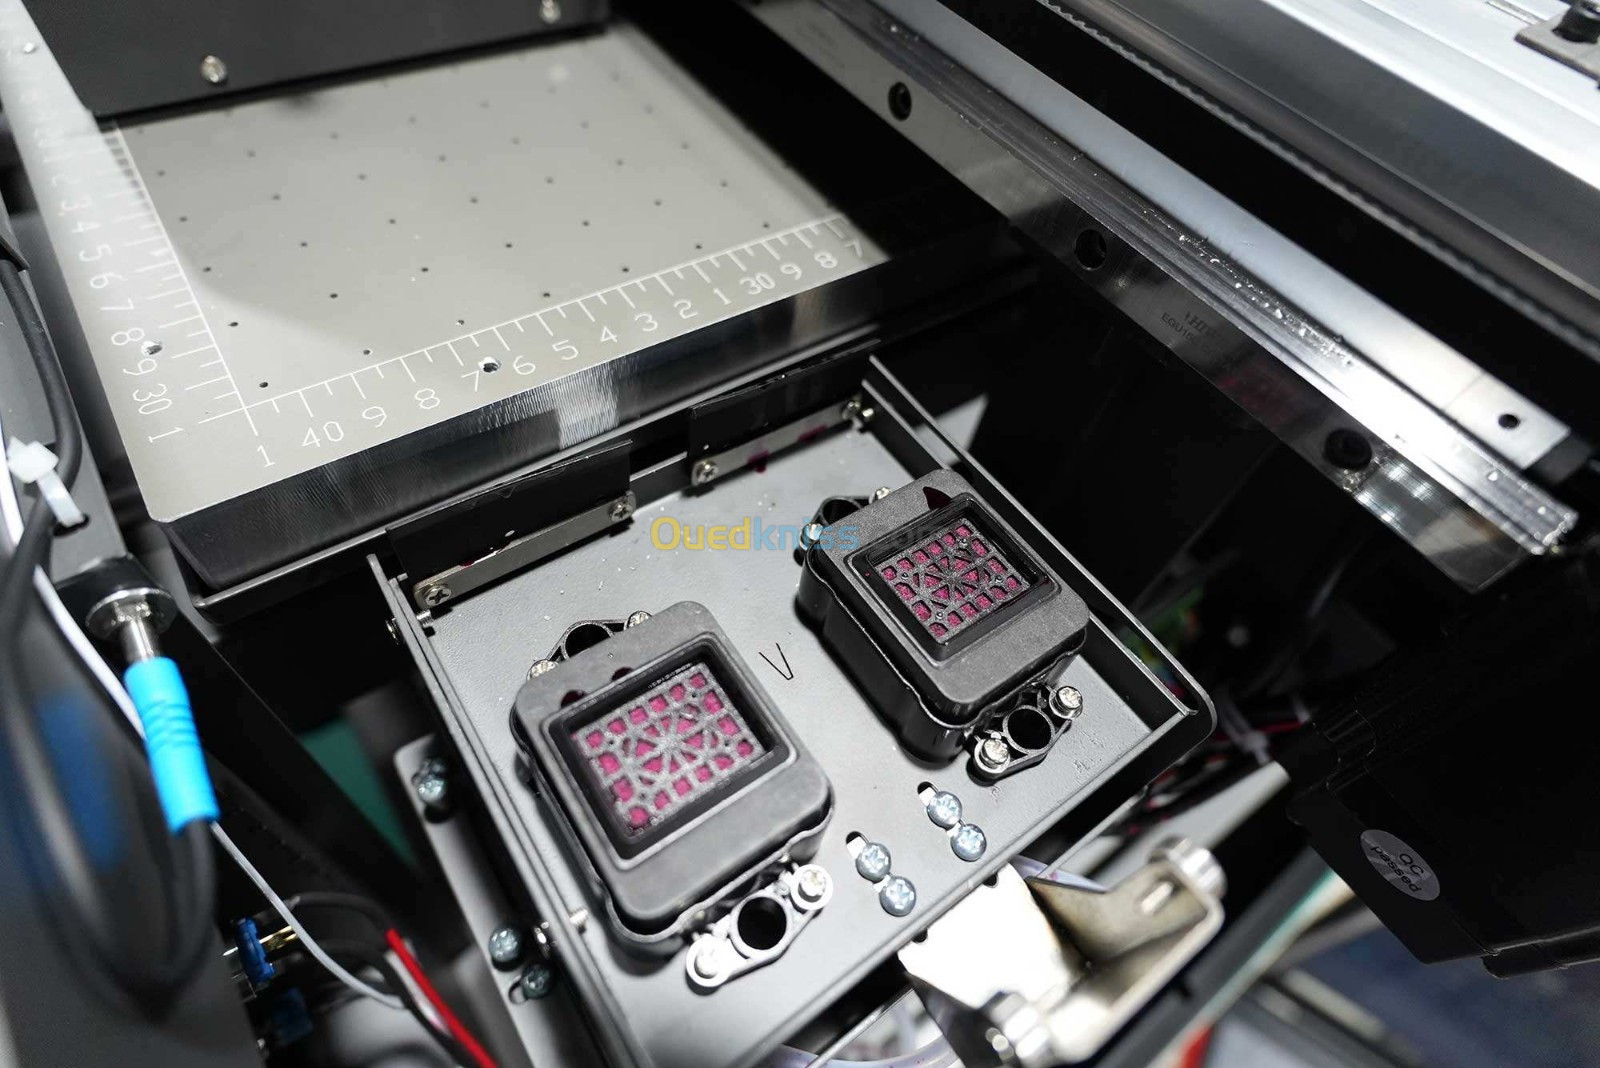 UV ERASMART Imprimante Printer UV à plat A3+(35/45 CM)+ DTF (autocollant de transfert) +rotative 360